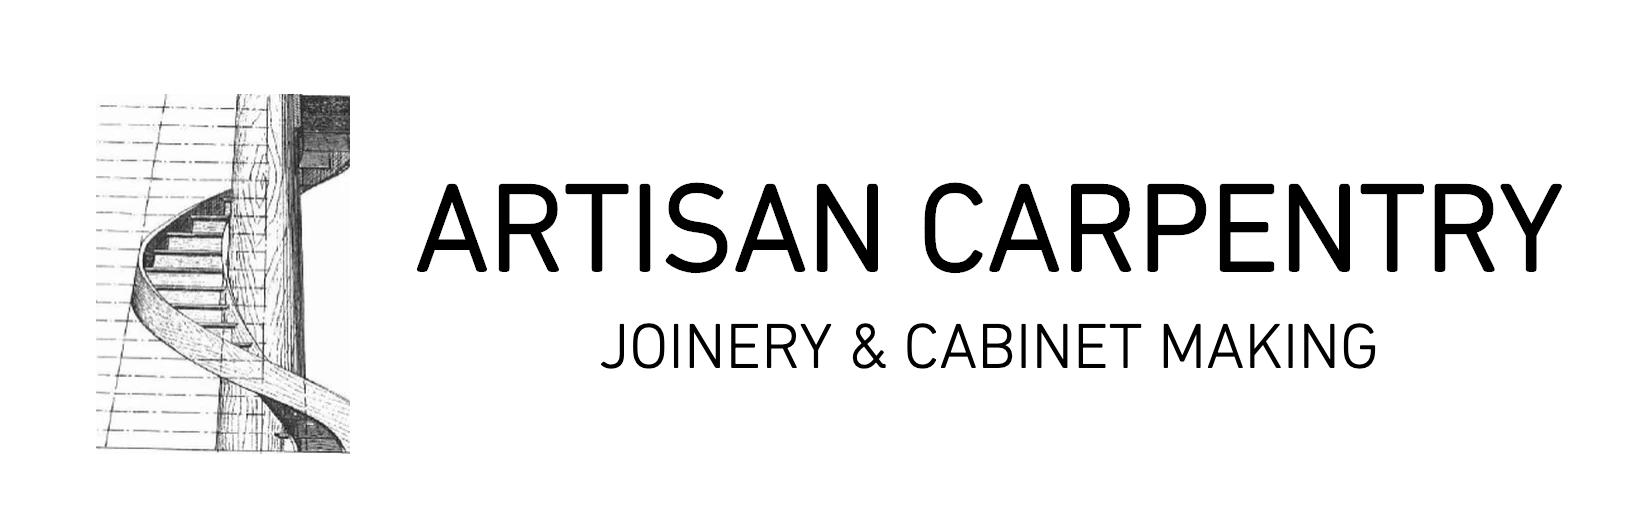 Woodworker logo: Artisan Carpentry